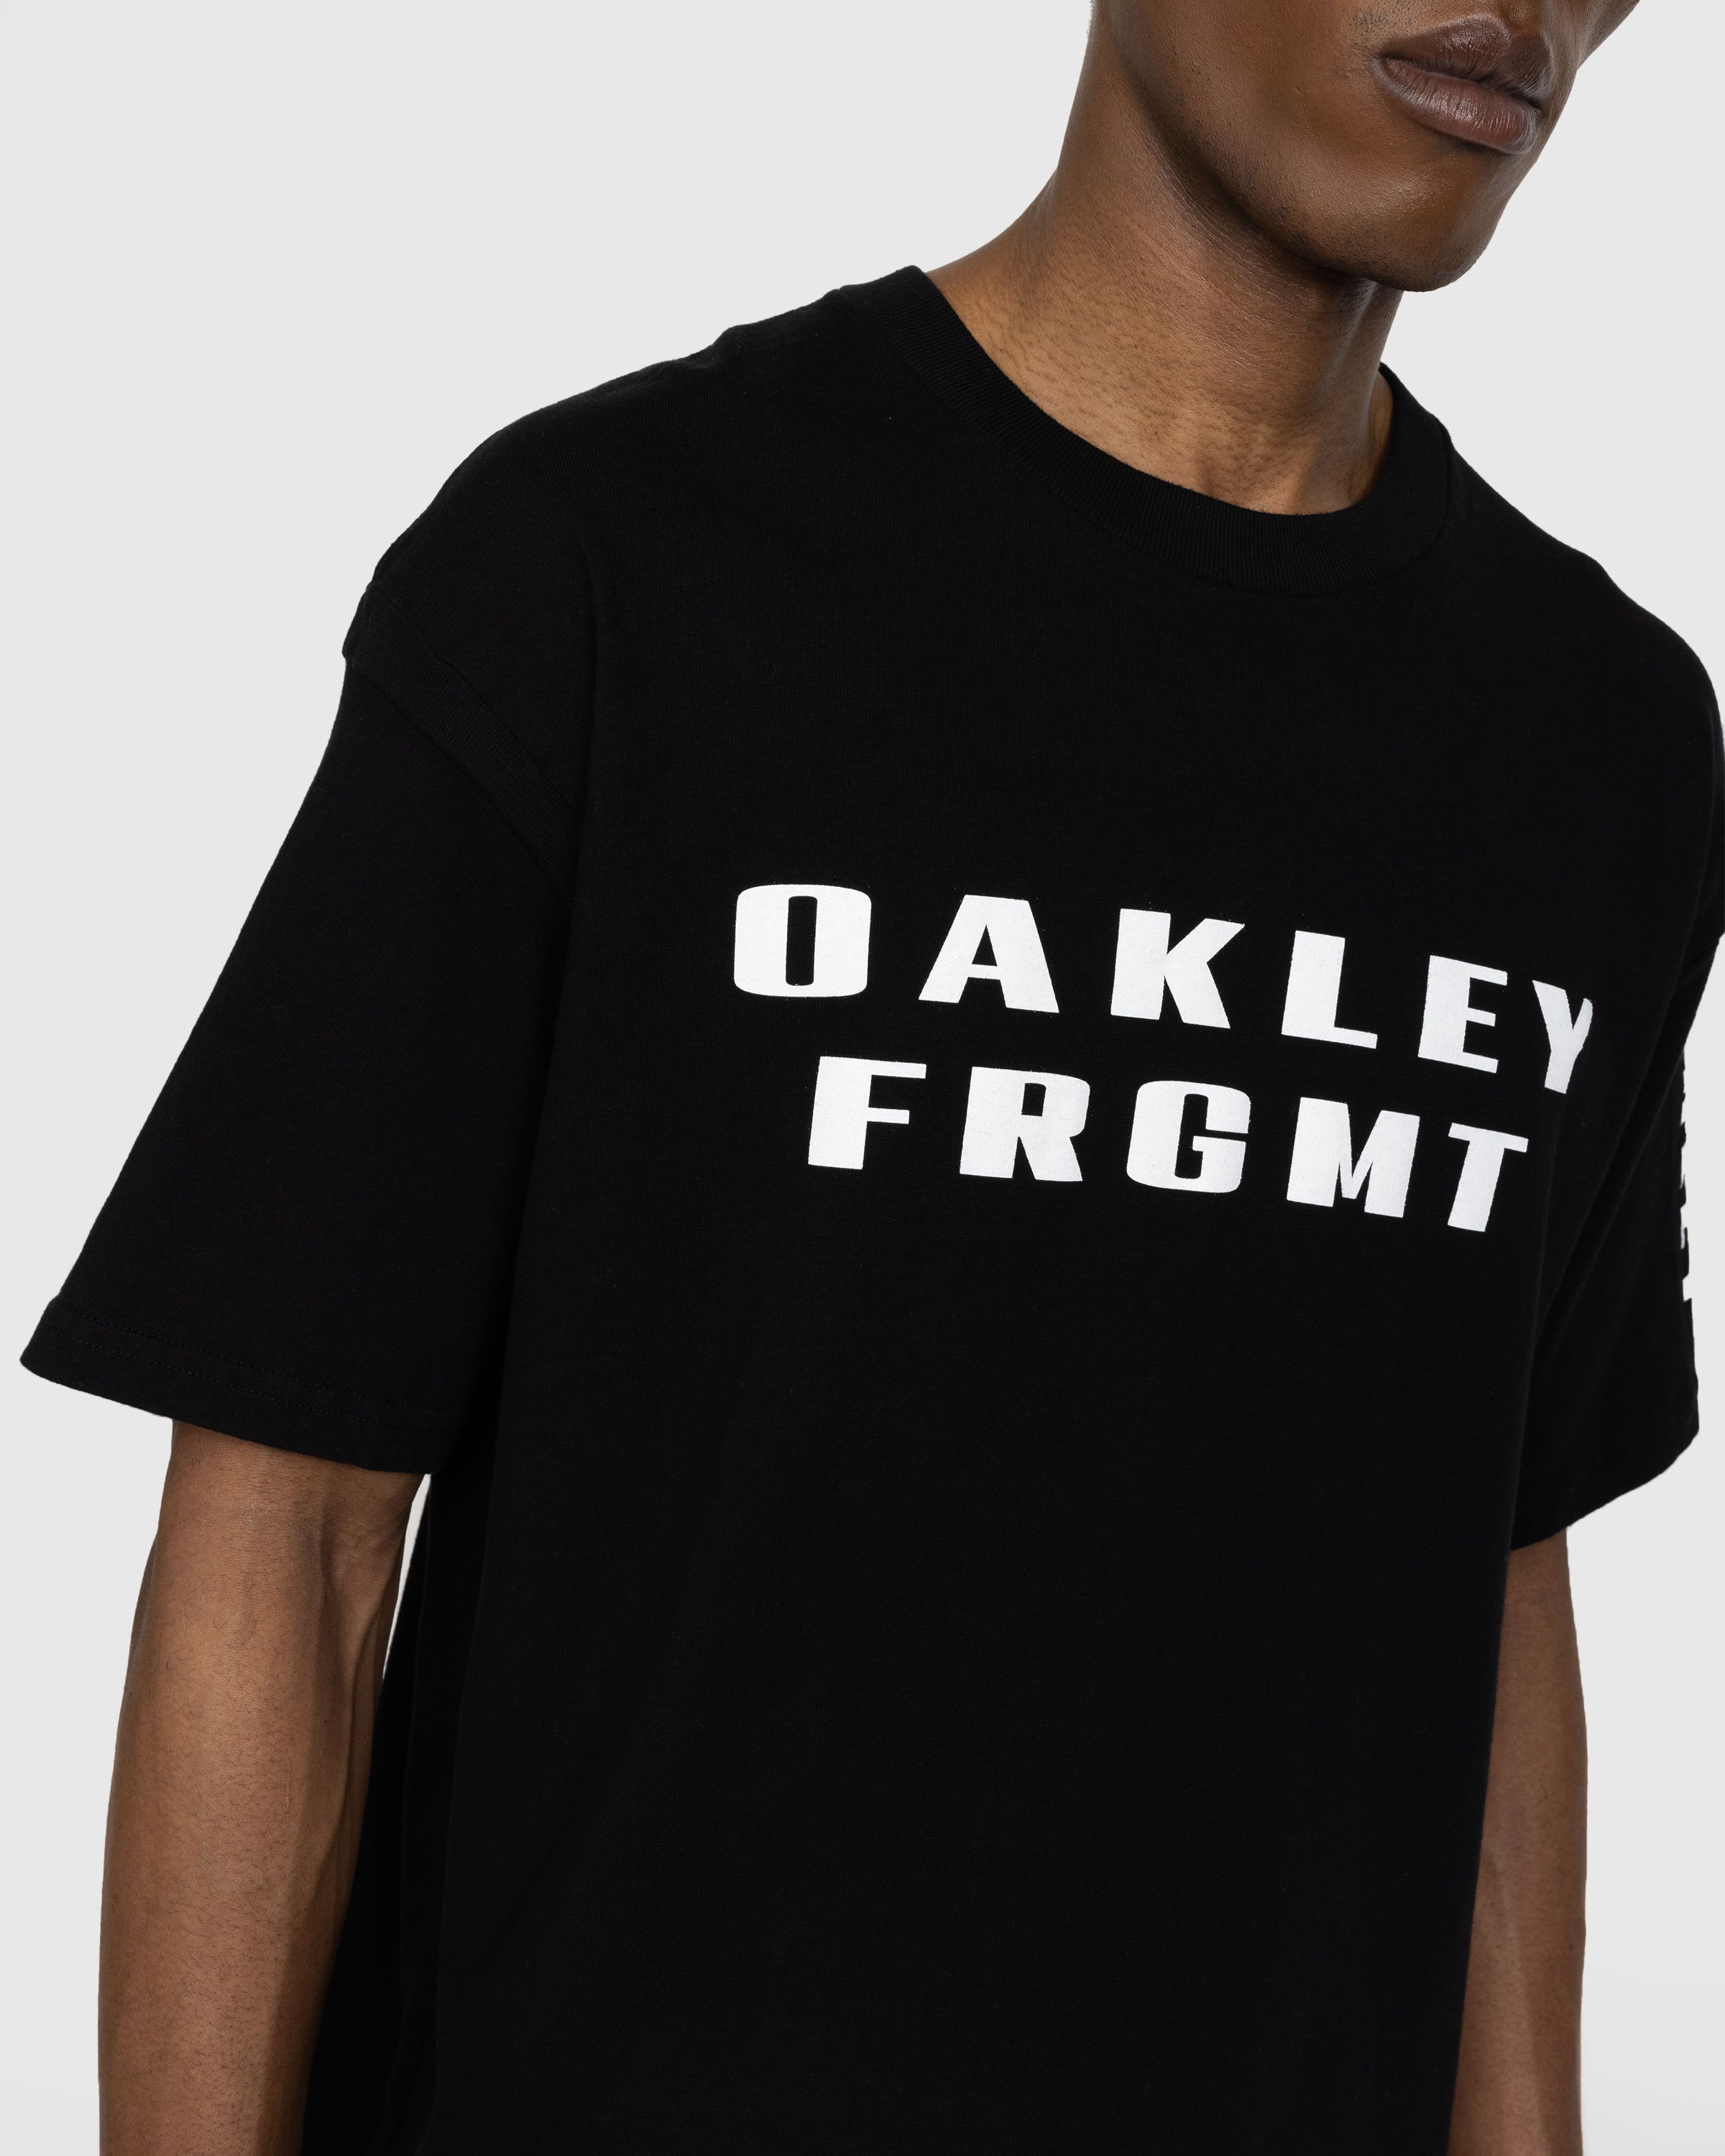 Oakley x Fragment - T-Shirt Blackout - Clothing - Black - Image 4